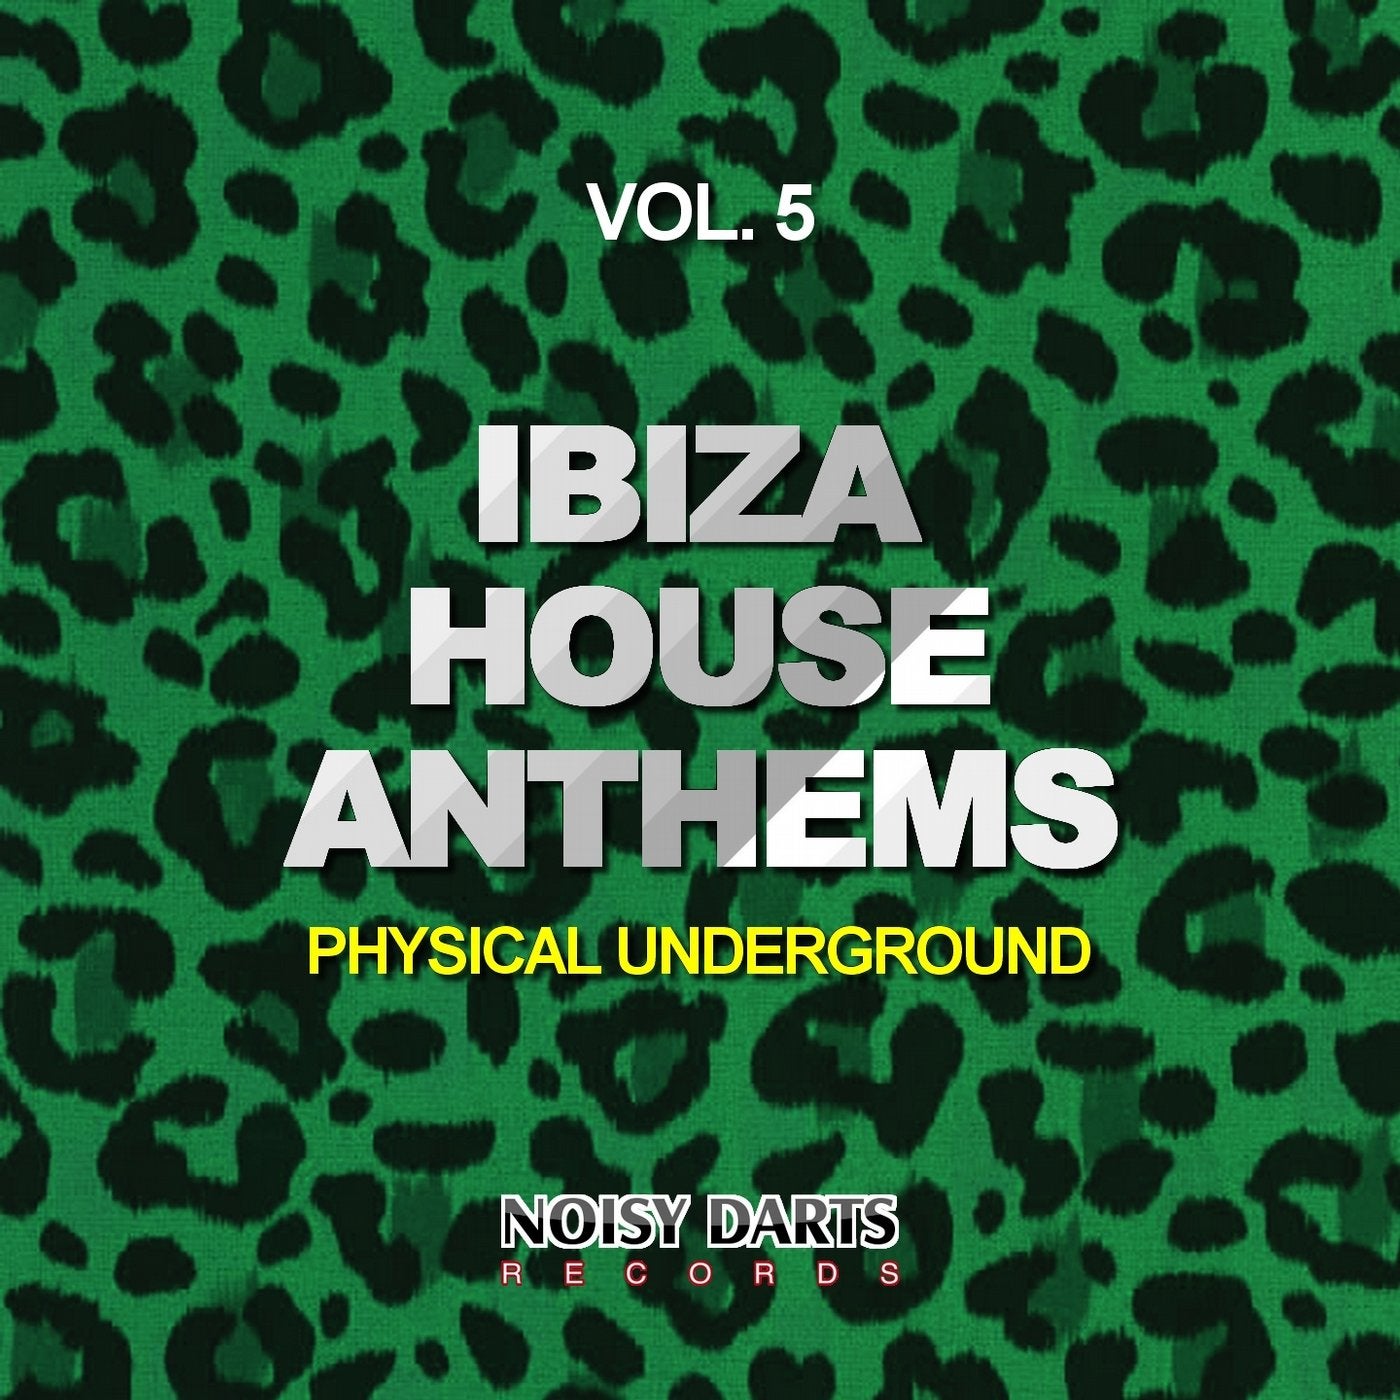 Ibiza House Anthems, Vol. 5 (Physical Underground)